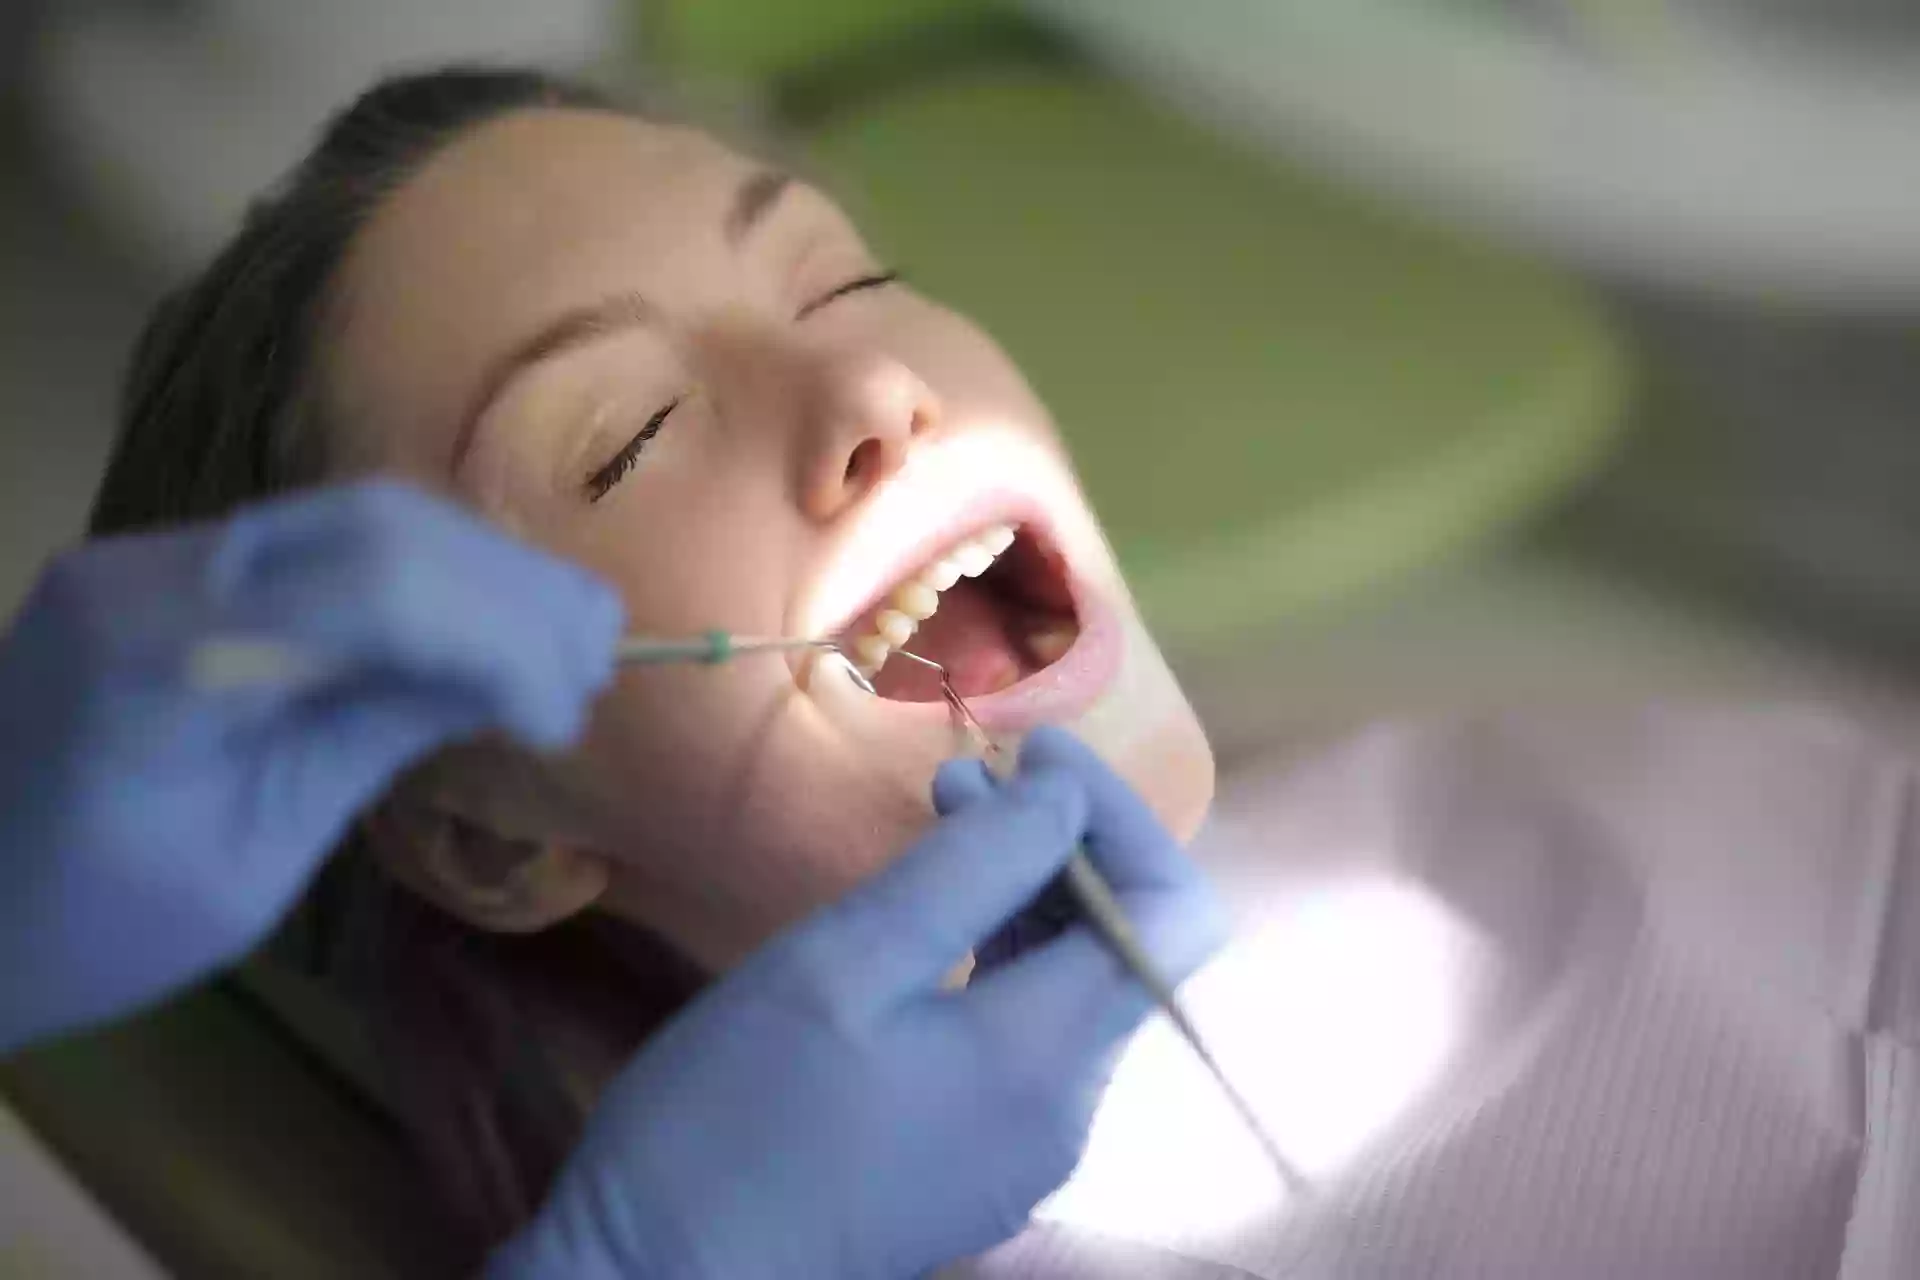 Dentista En Fuenlabrada - Clínica Dental Zamora 25